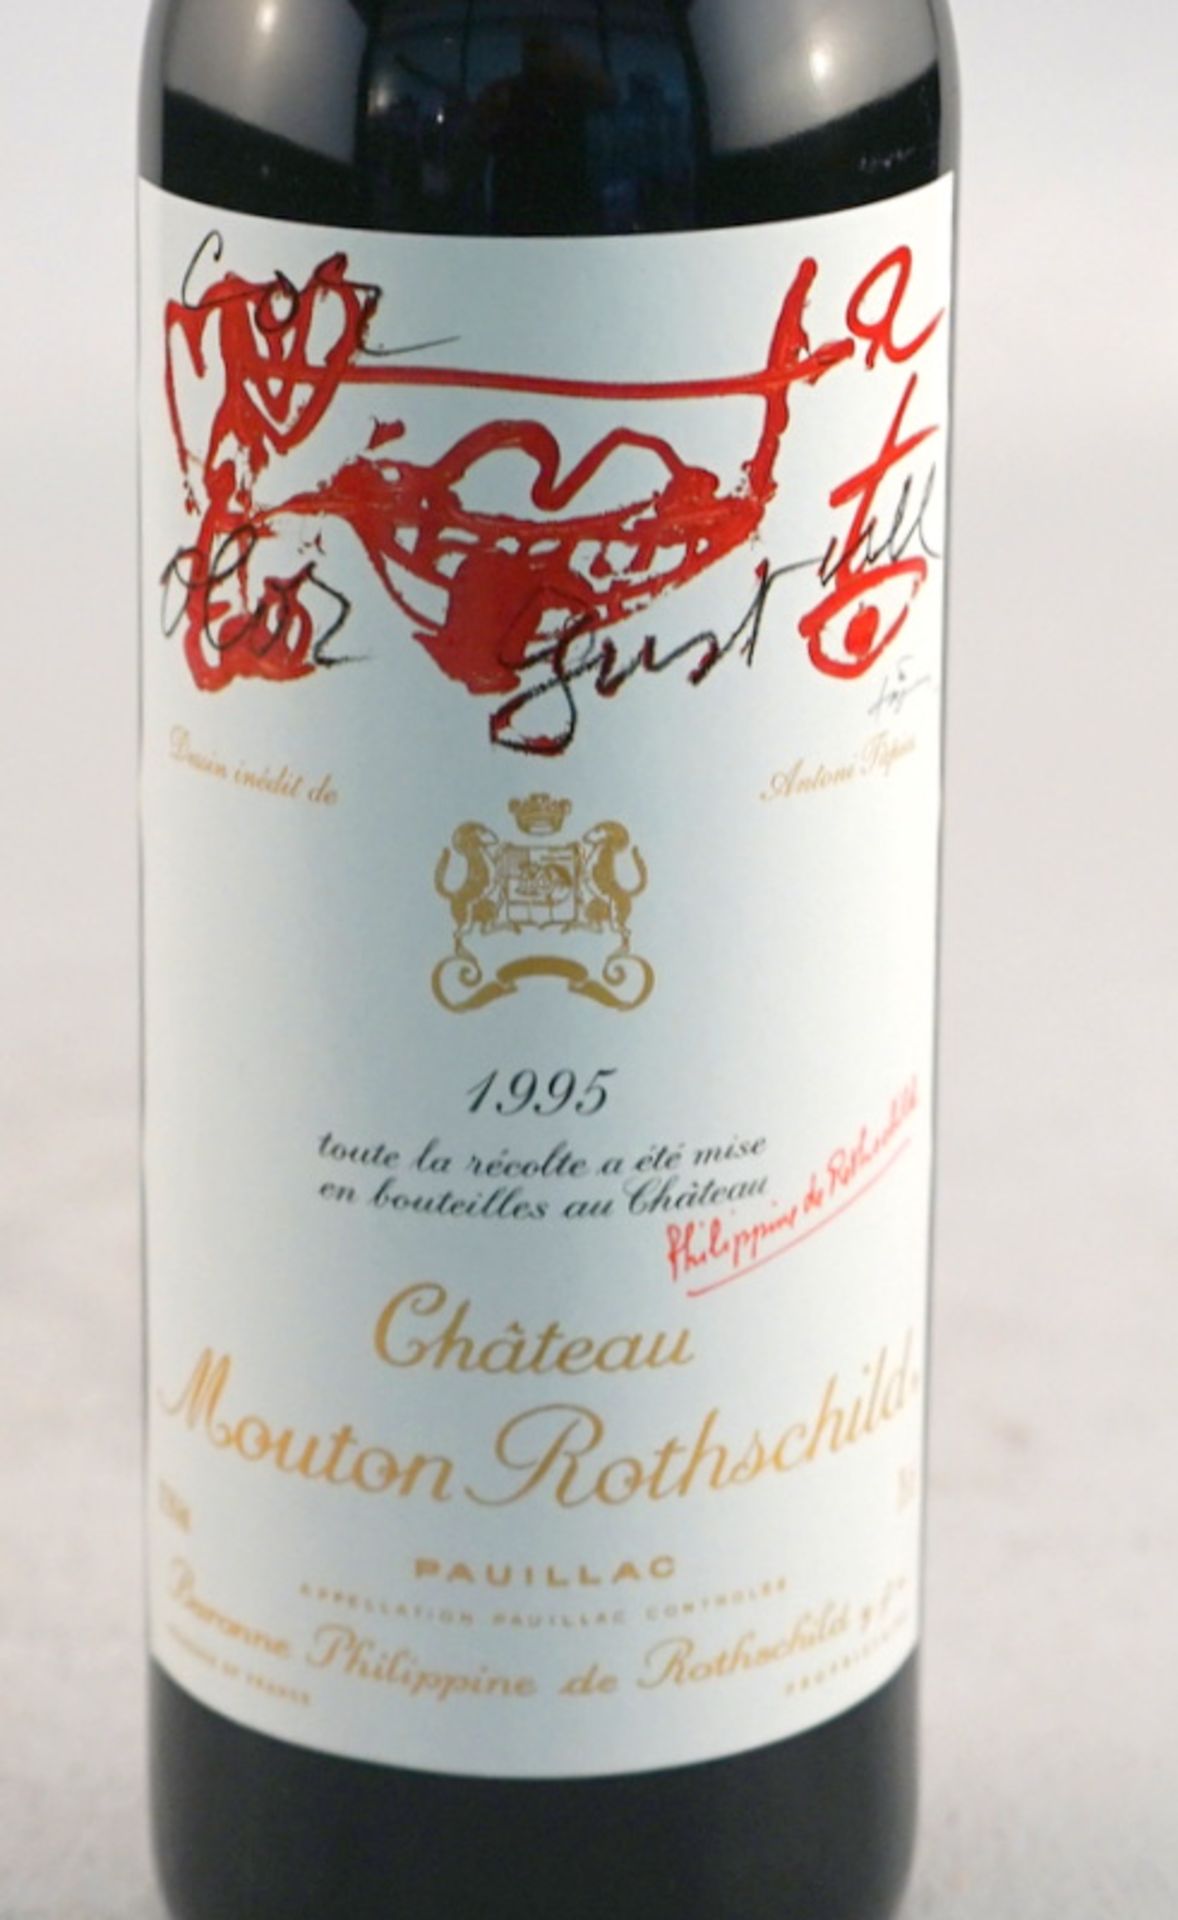 Chateau Mouton Rothschild 1er Grand Cru Classé 1995 - Image 2 of 3